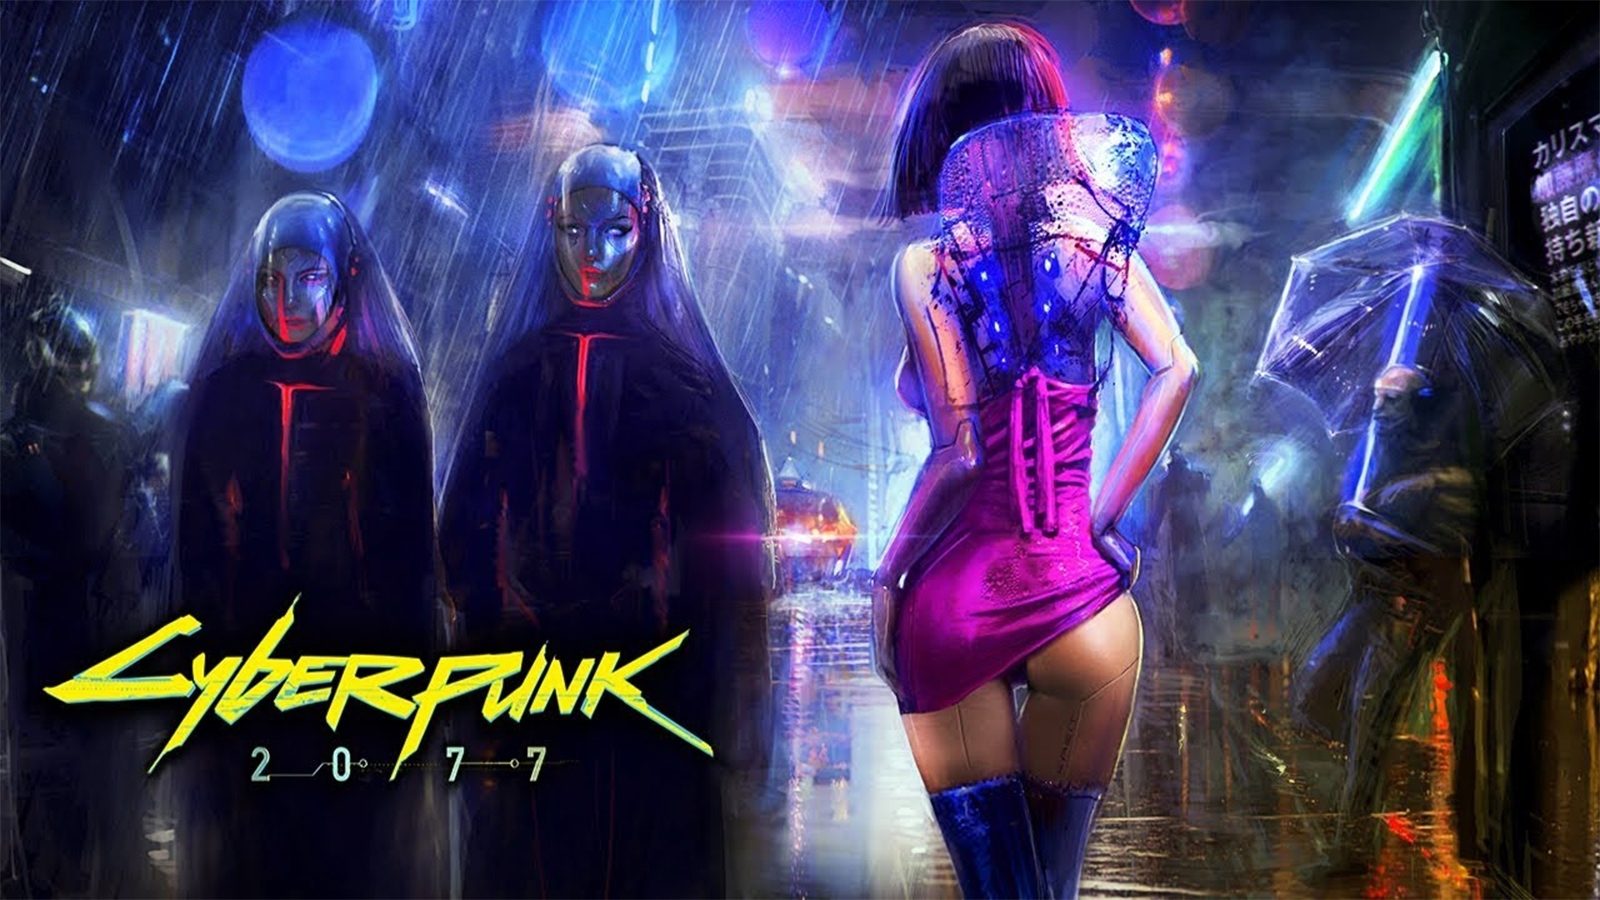 Cyberpunk2077 gameplay released